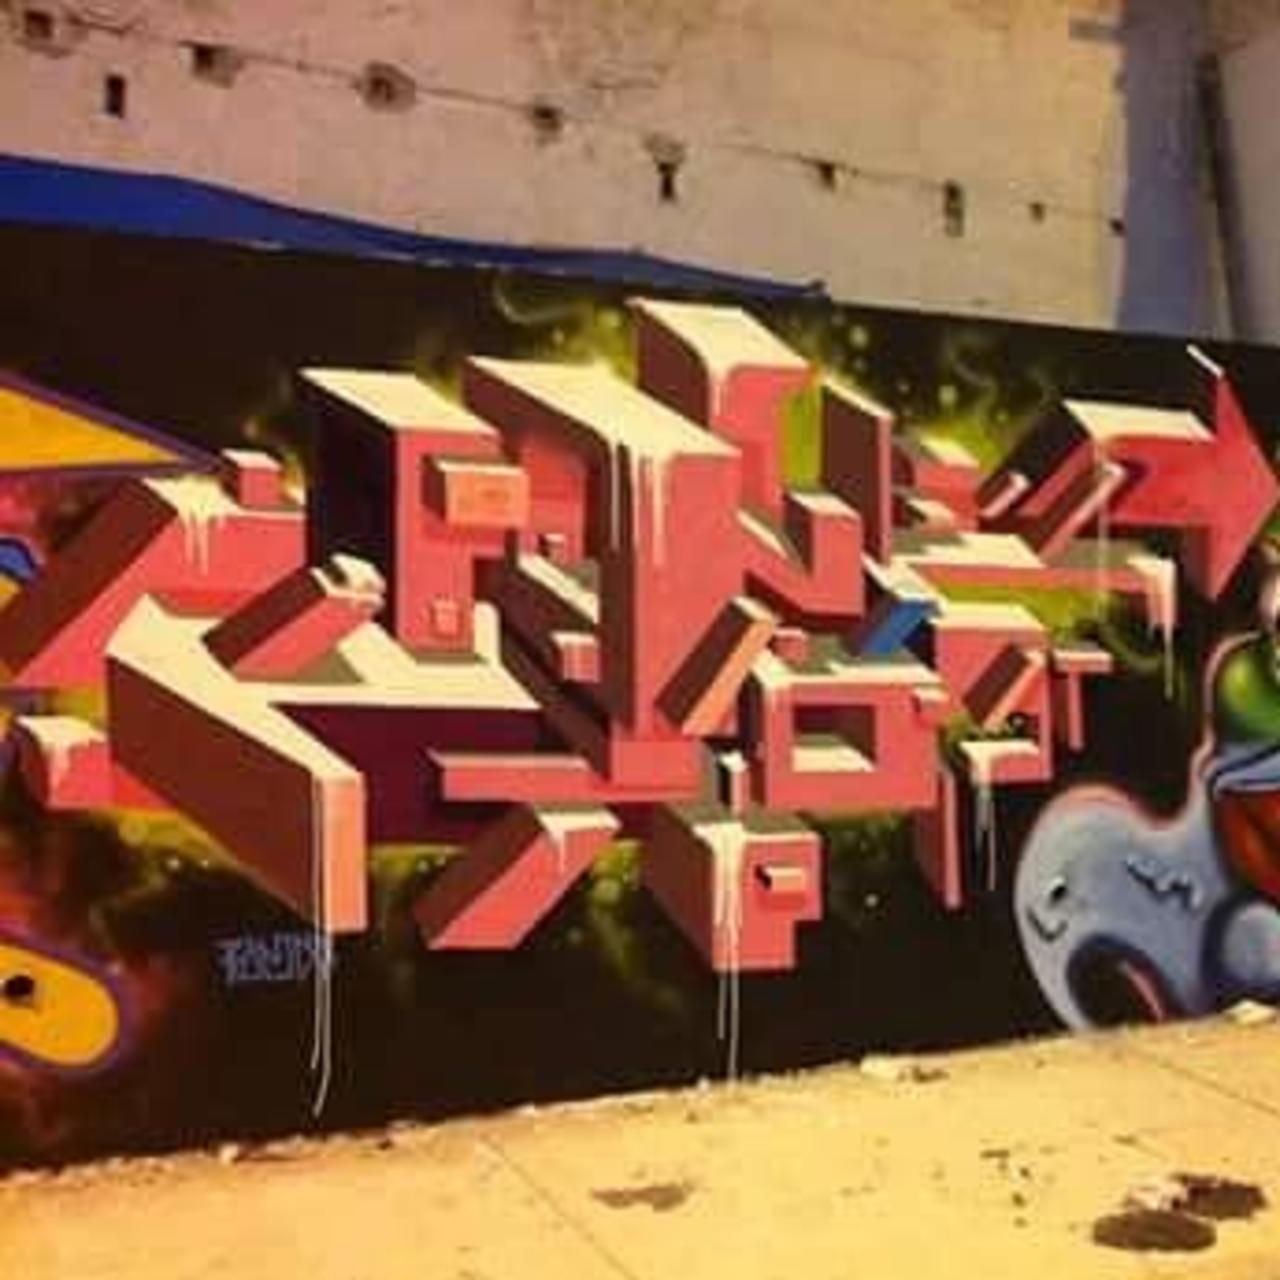 Bands auc-la22-d #graffiti #artistasurbanoscrew #ruasdazn #streetartrio #streetart by artistasurbanoscrew http://t.co/dQD5uvU4j8